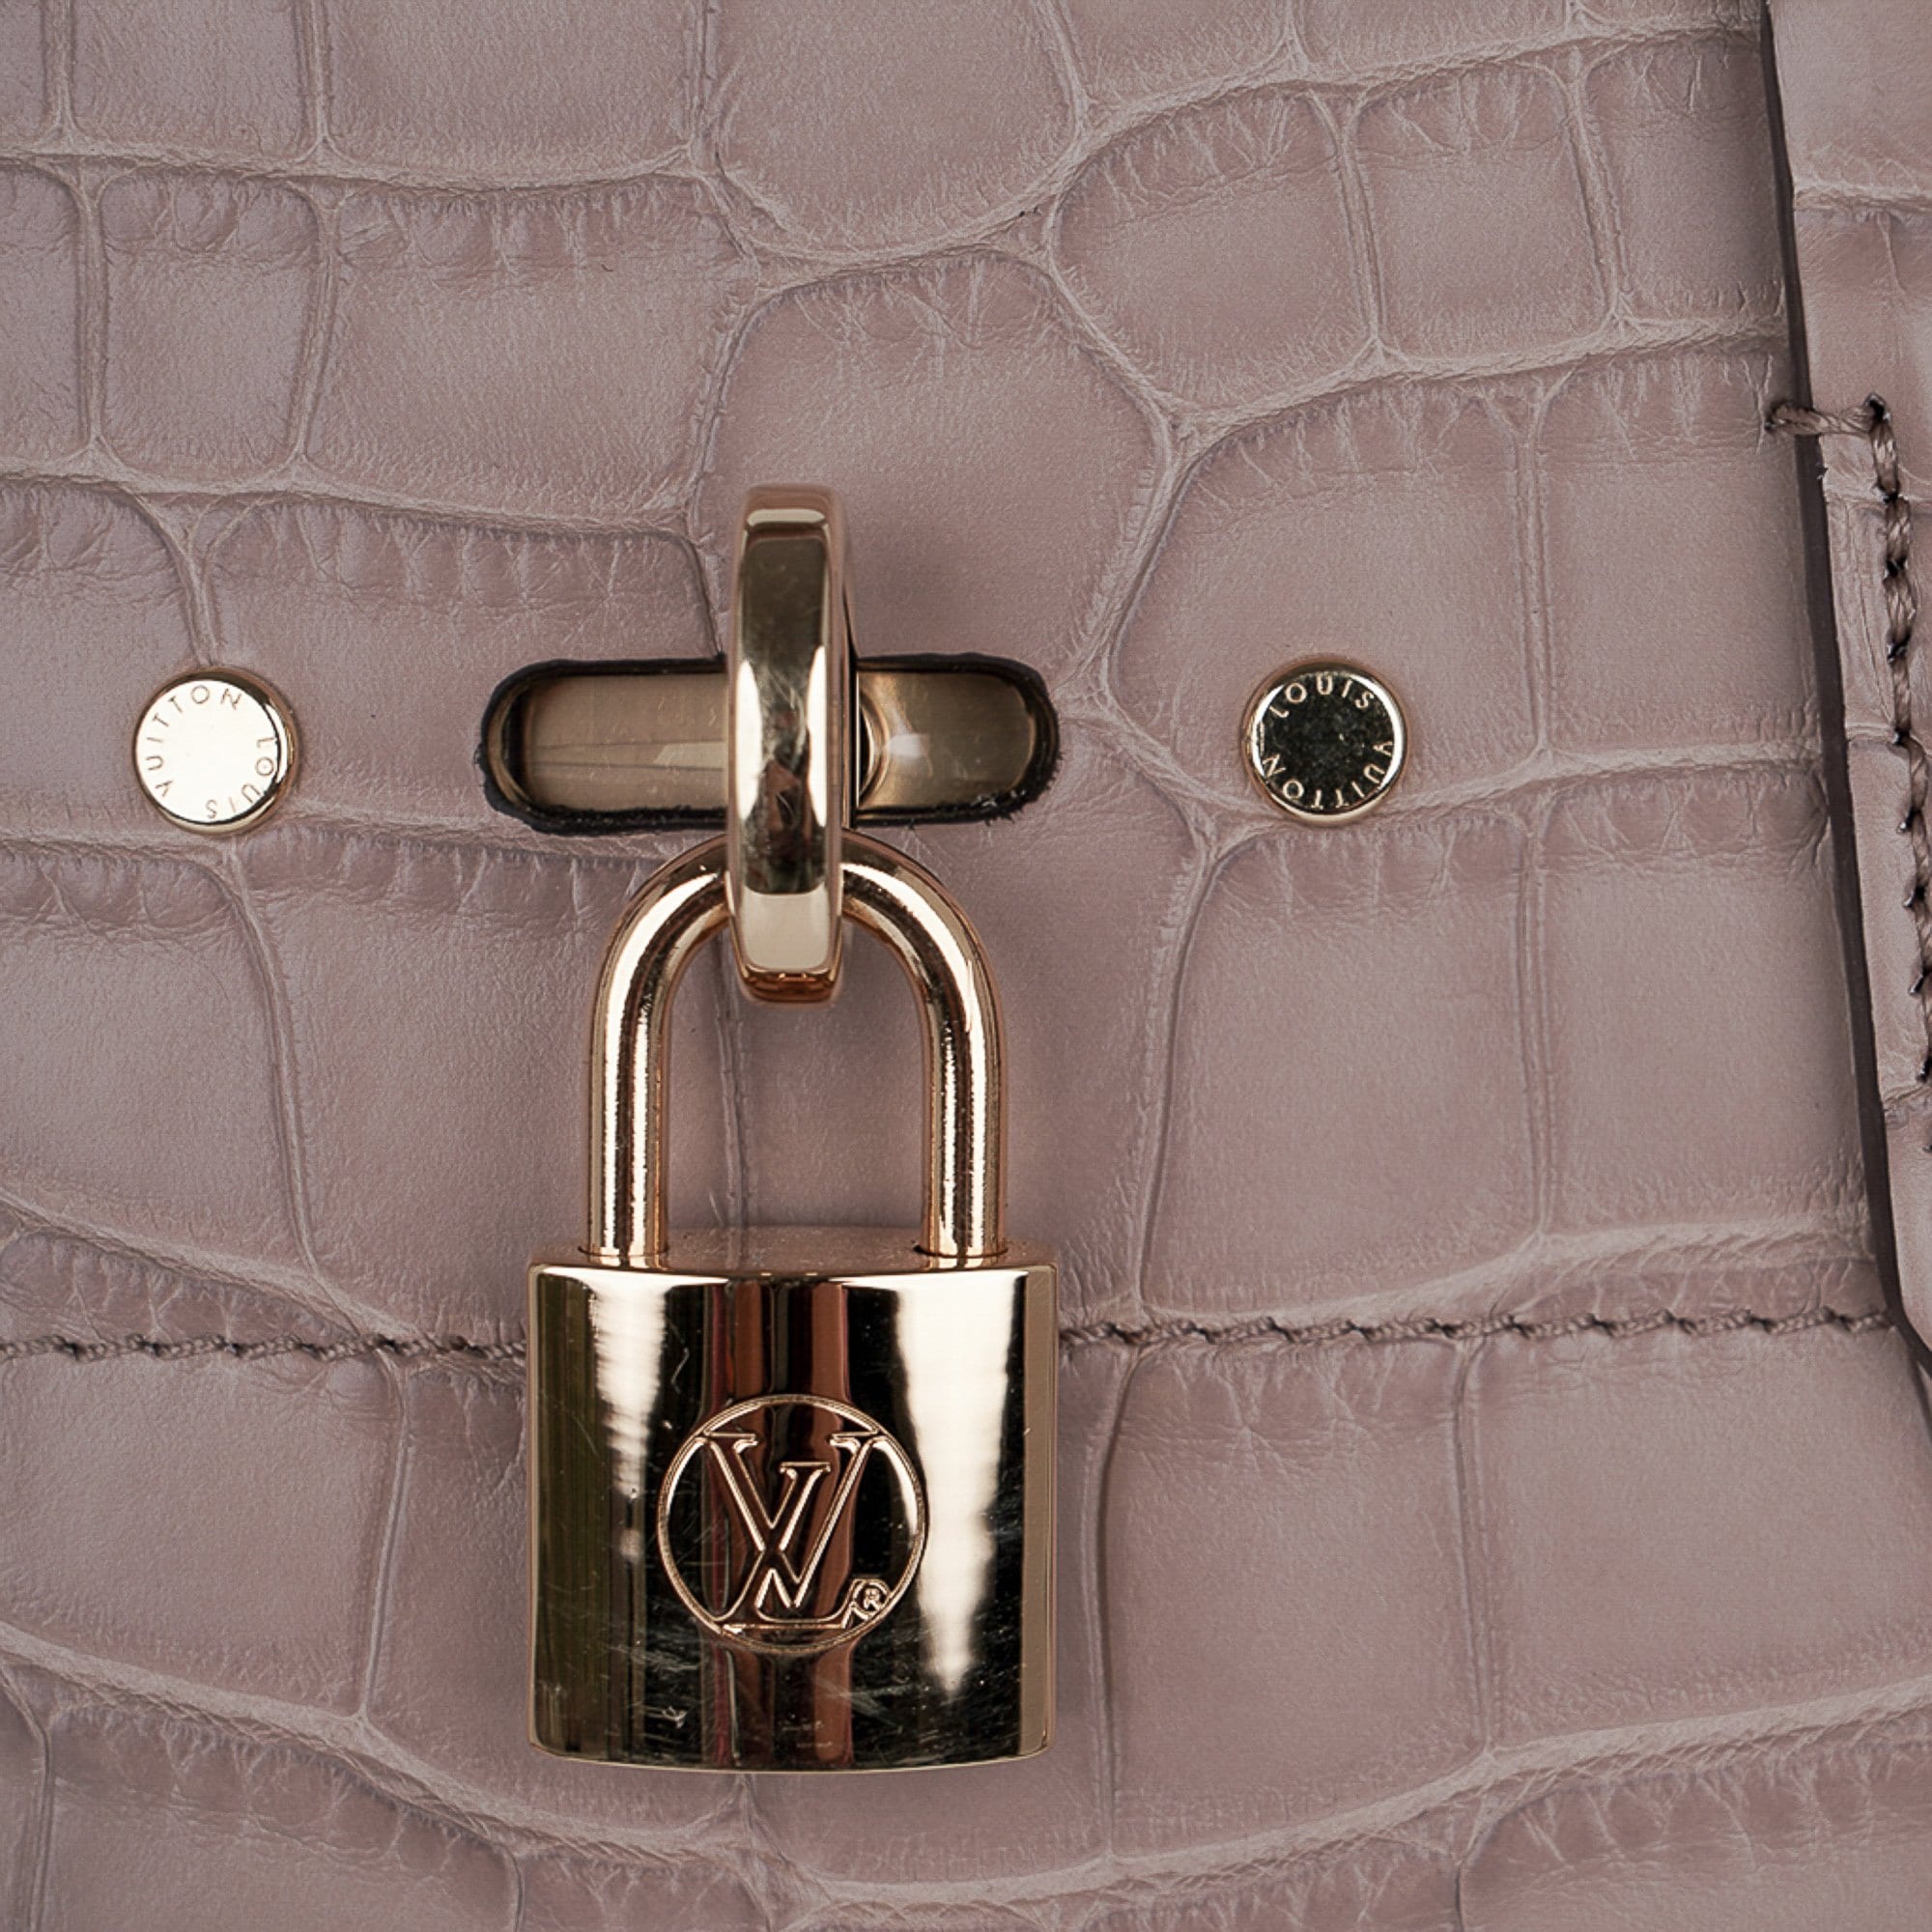 City Steamer Louis Vuitton Les extraordinaires Moka Embossed